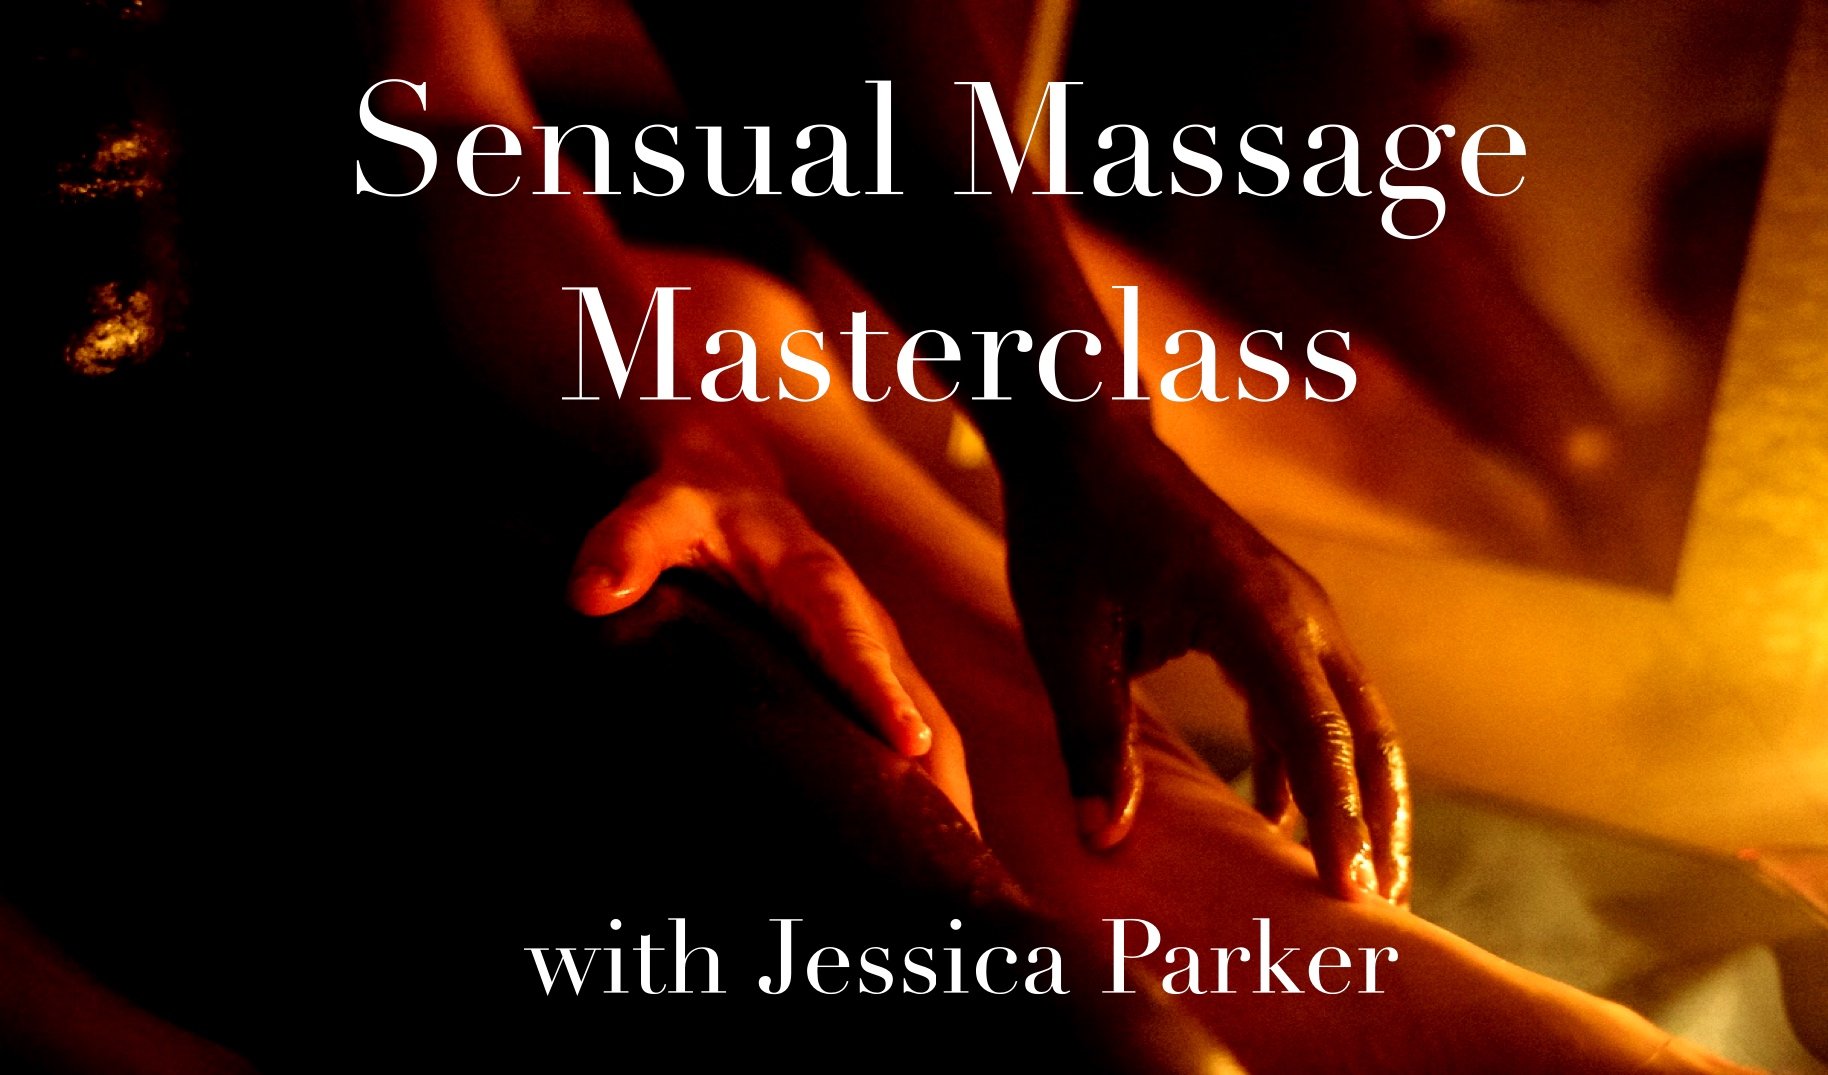 JessicaParker Therapist London